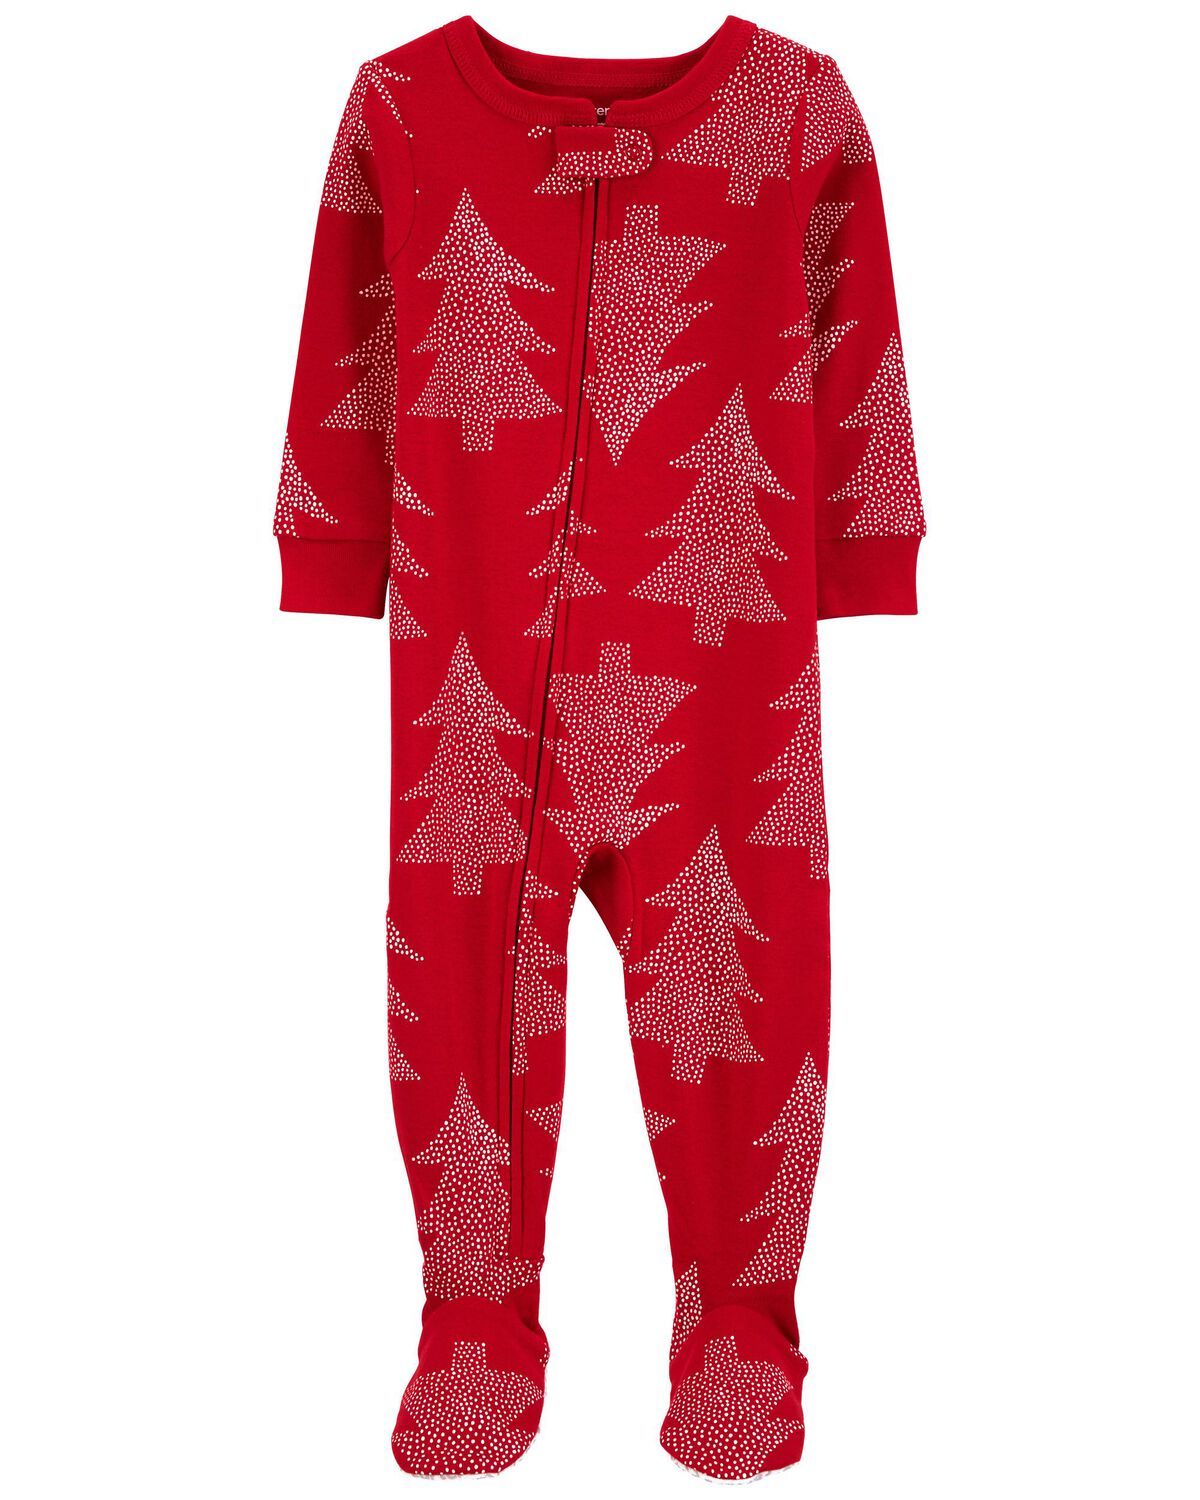 Red Baby 1-Piece Christmas 100% Snug Fit Cotton Footie Pajamas | carters.com | Carter's